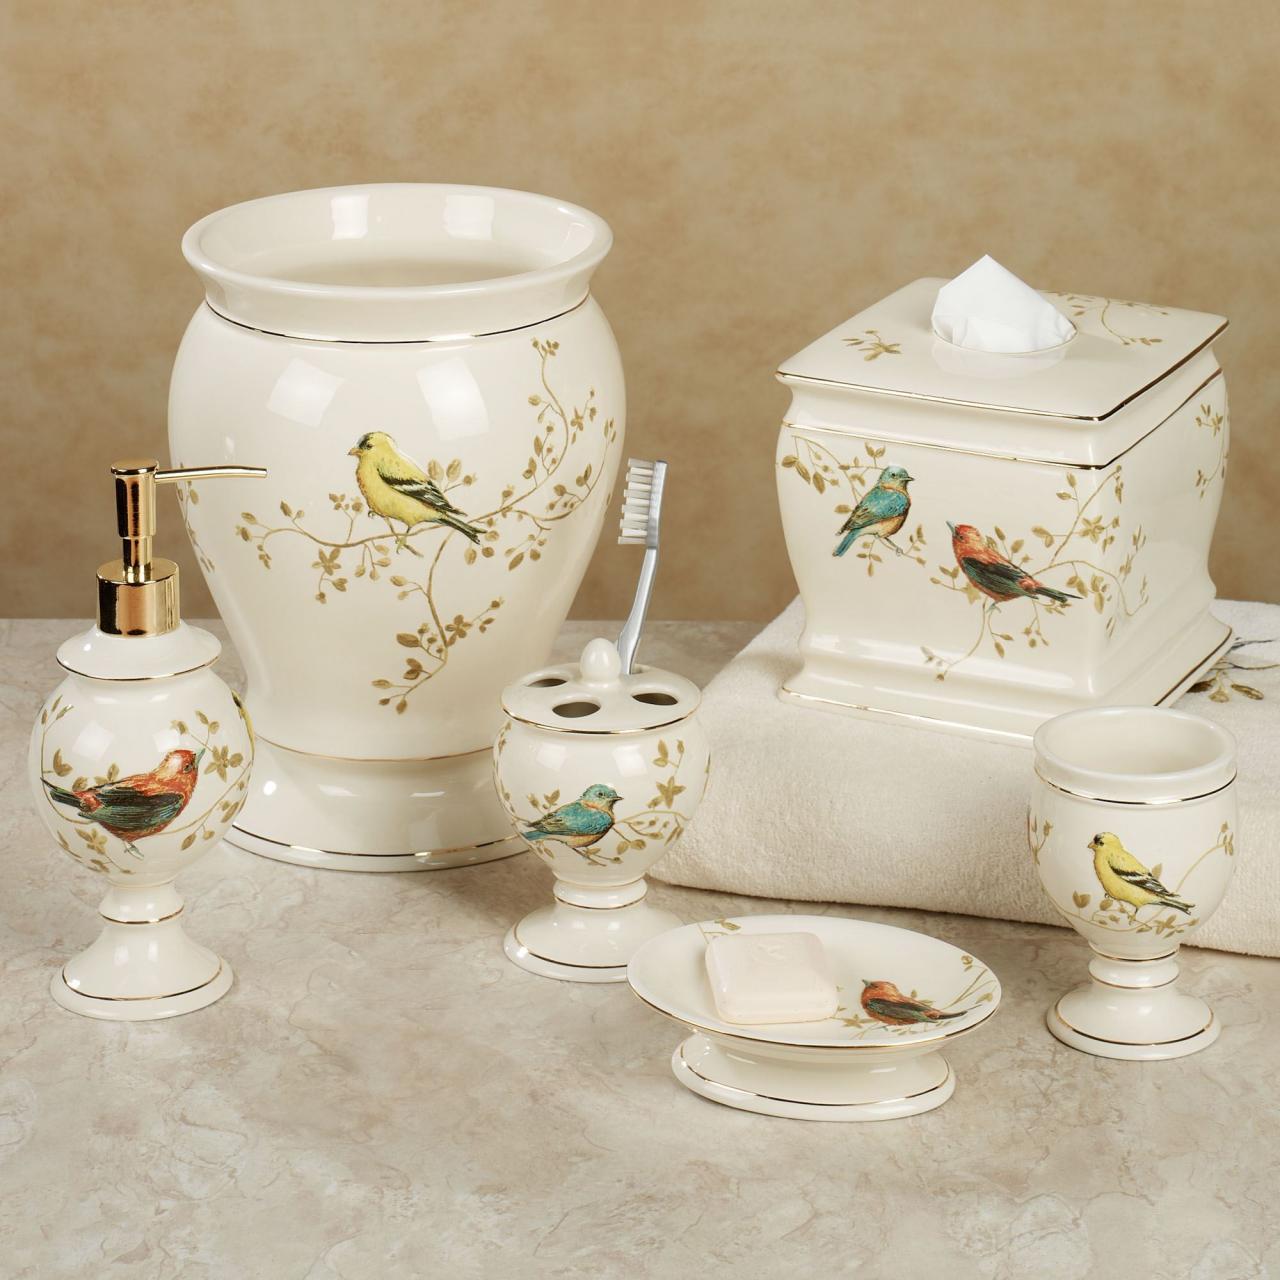 Gilded Bird Ceramic Bath Accessories